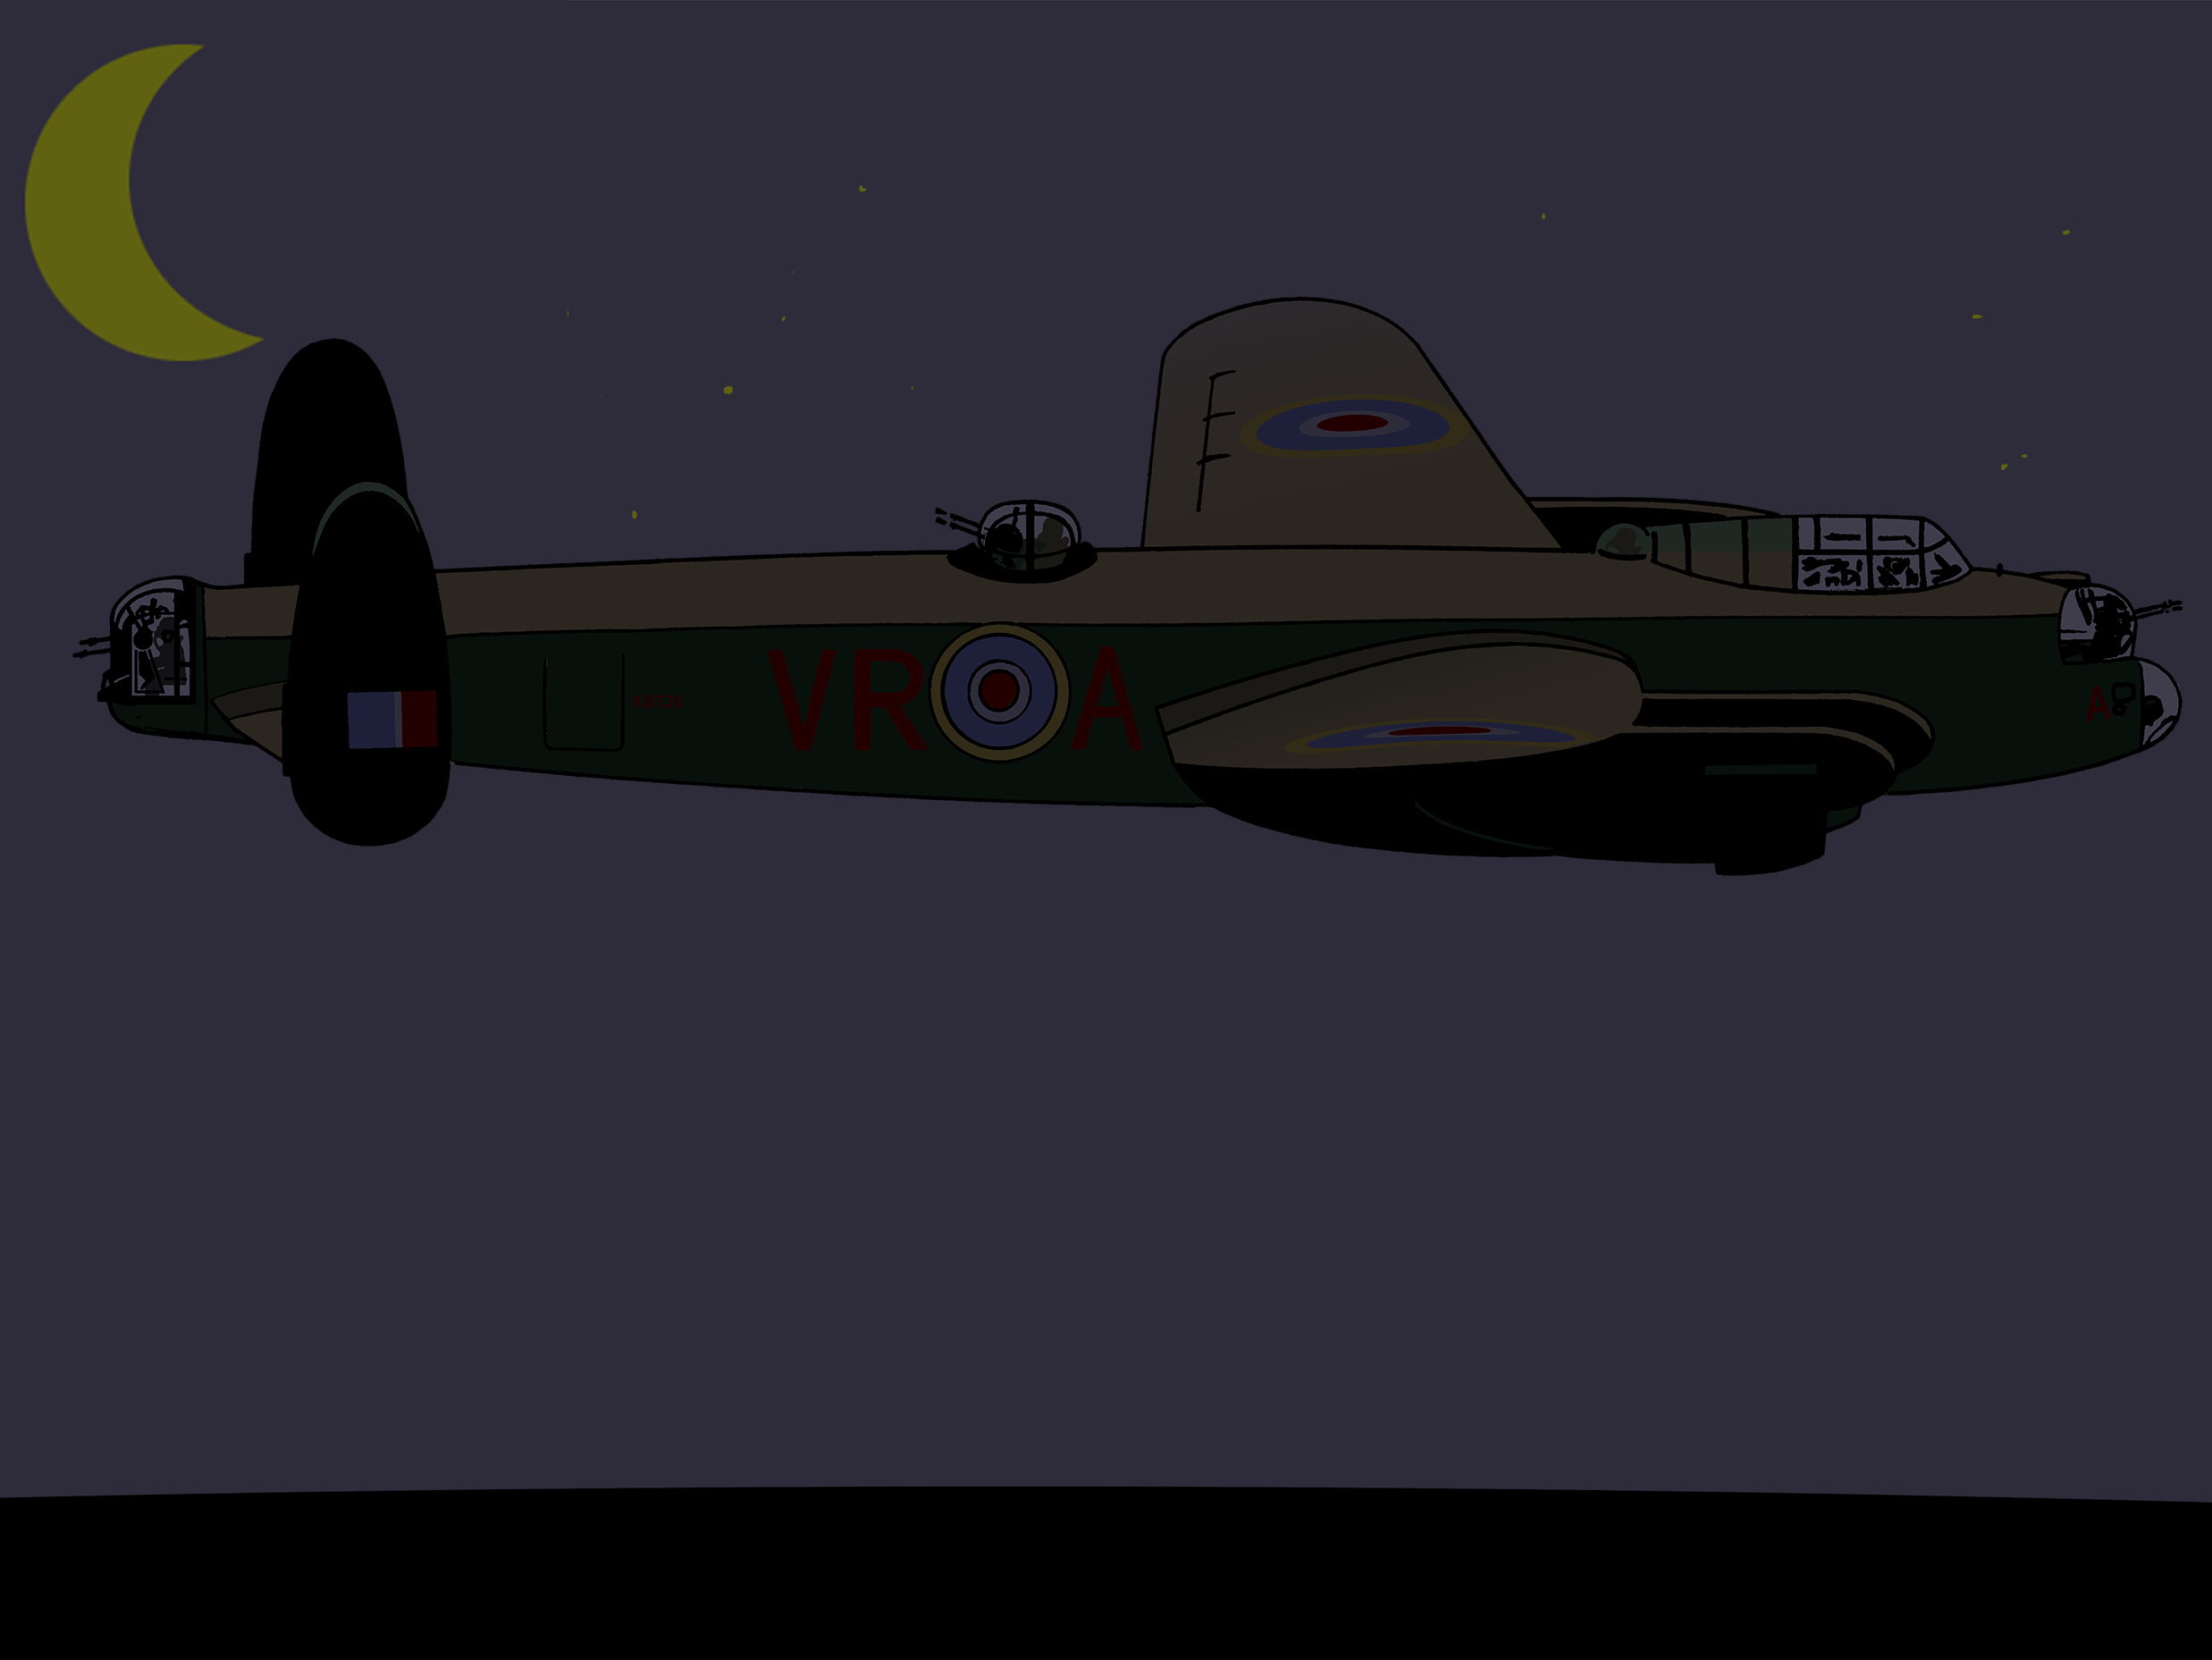 The Avro Lancaster